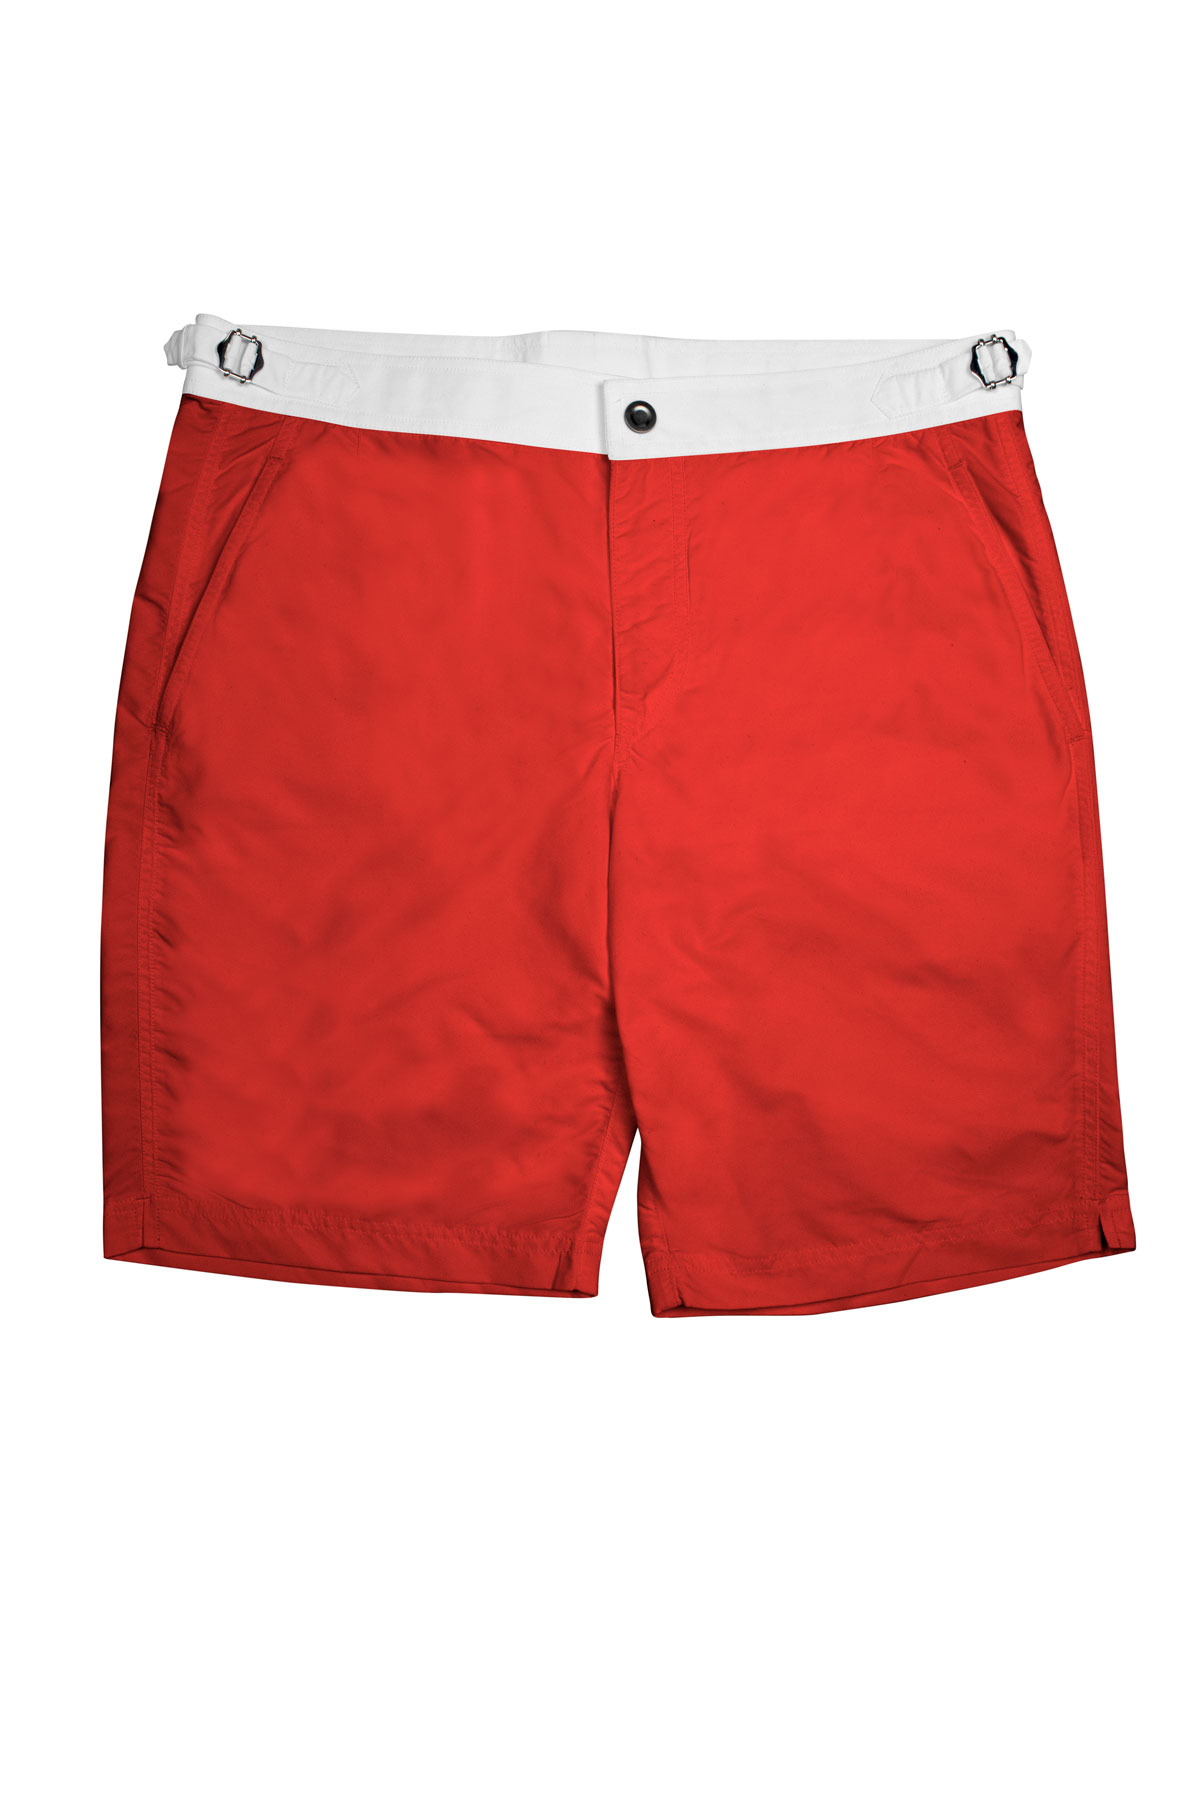 Red Swim Shorts w White Waistband